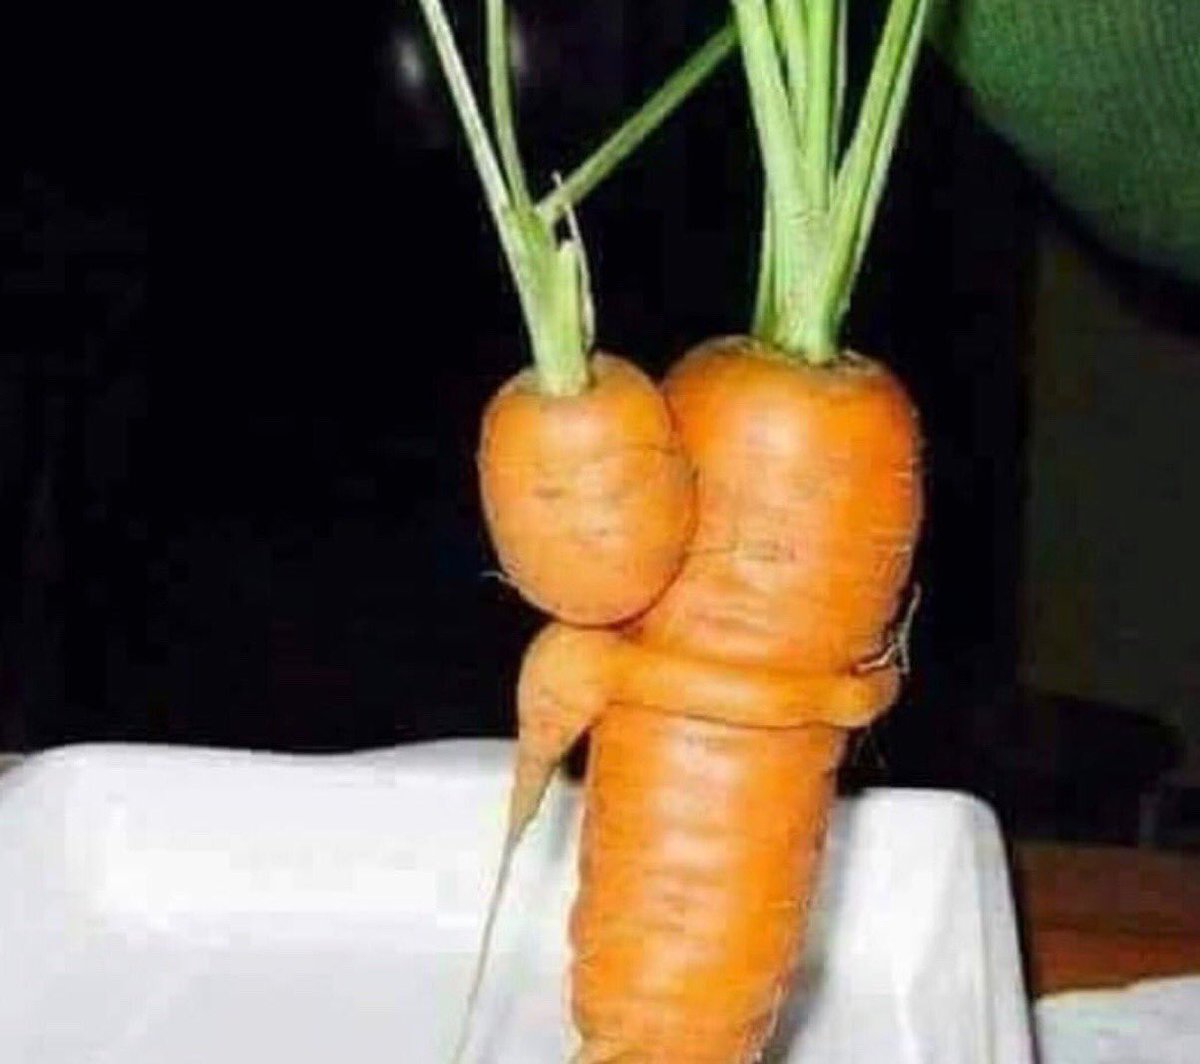 The day will come when a carrot will start a revolution! #carrotrev #vegrev